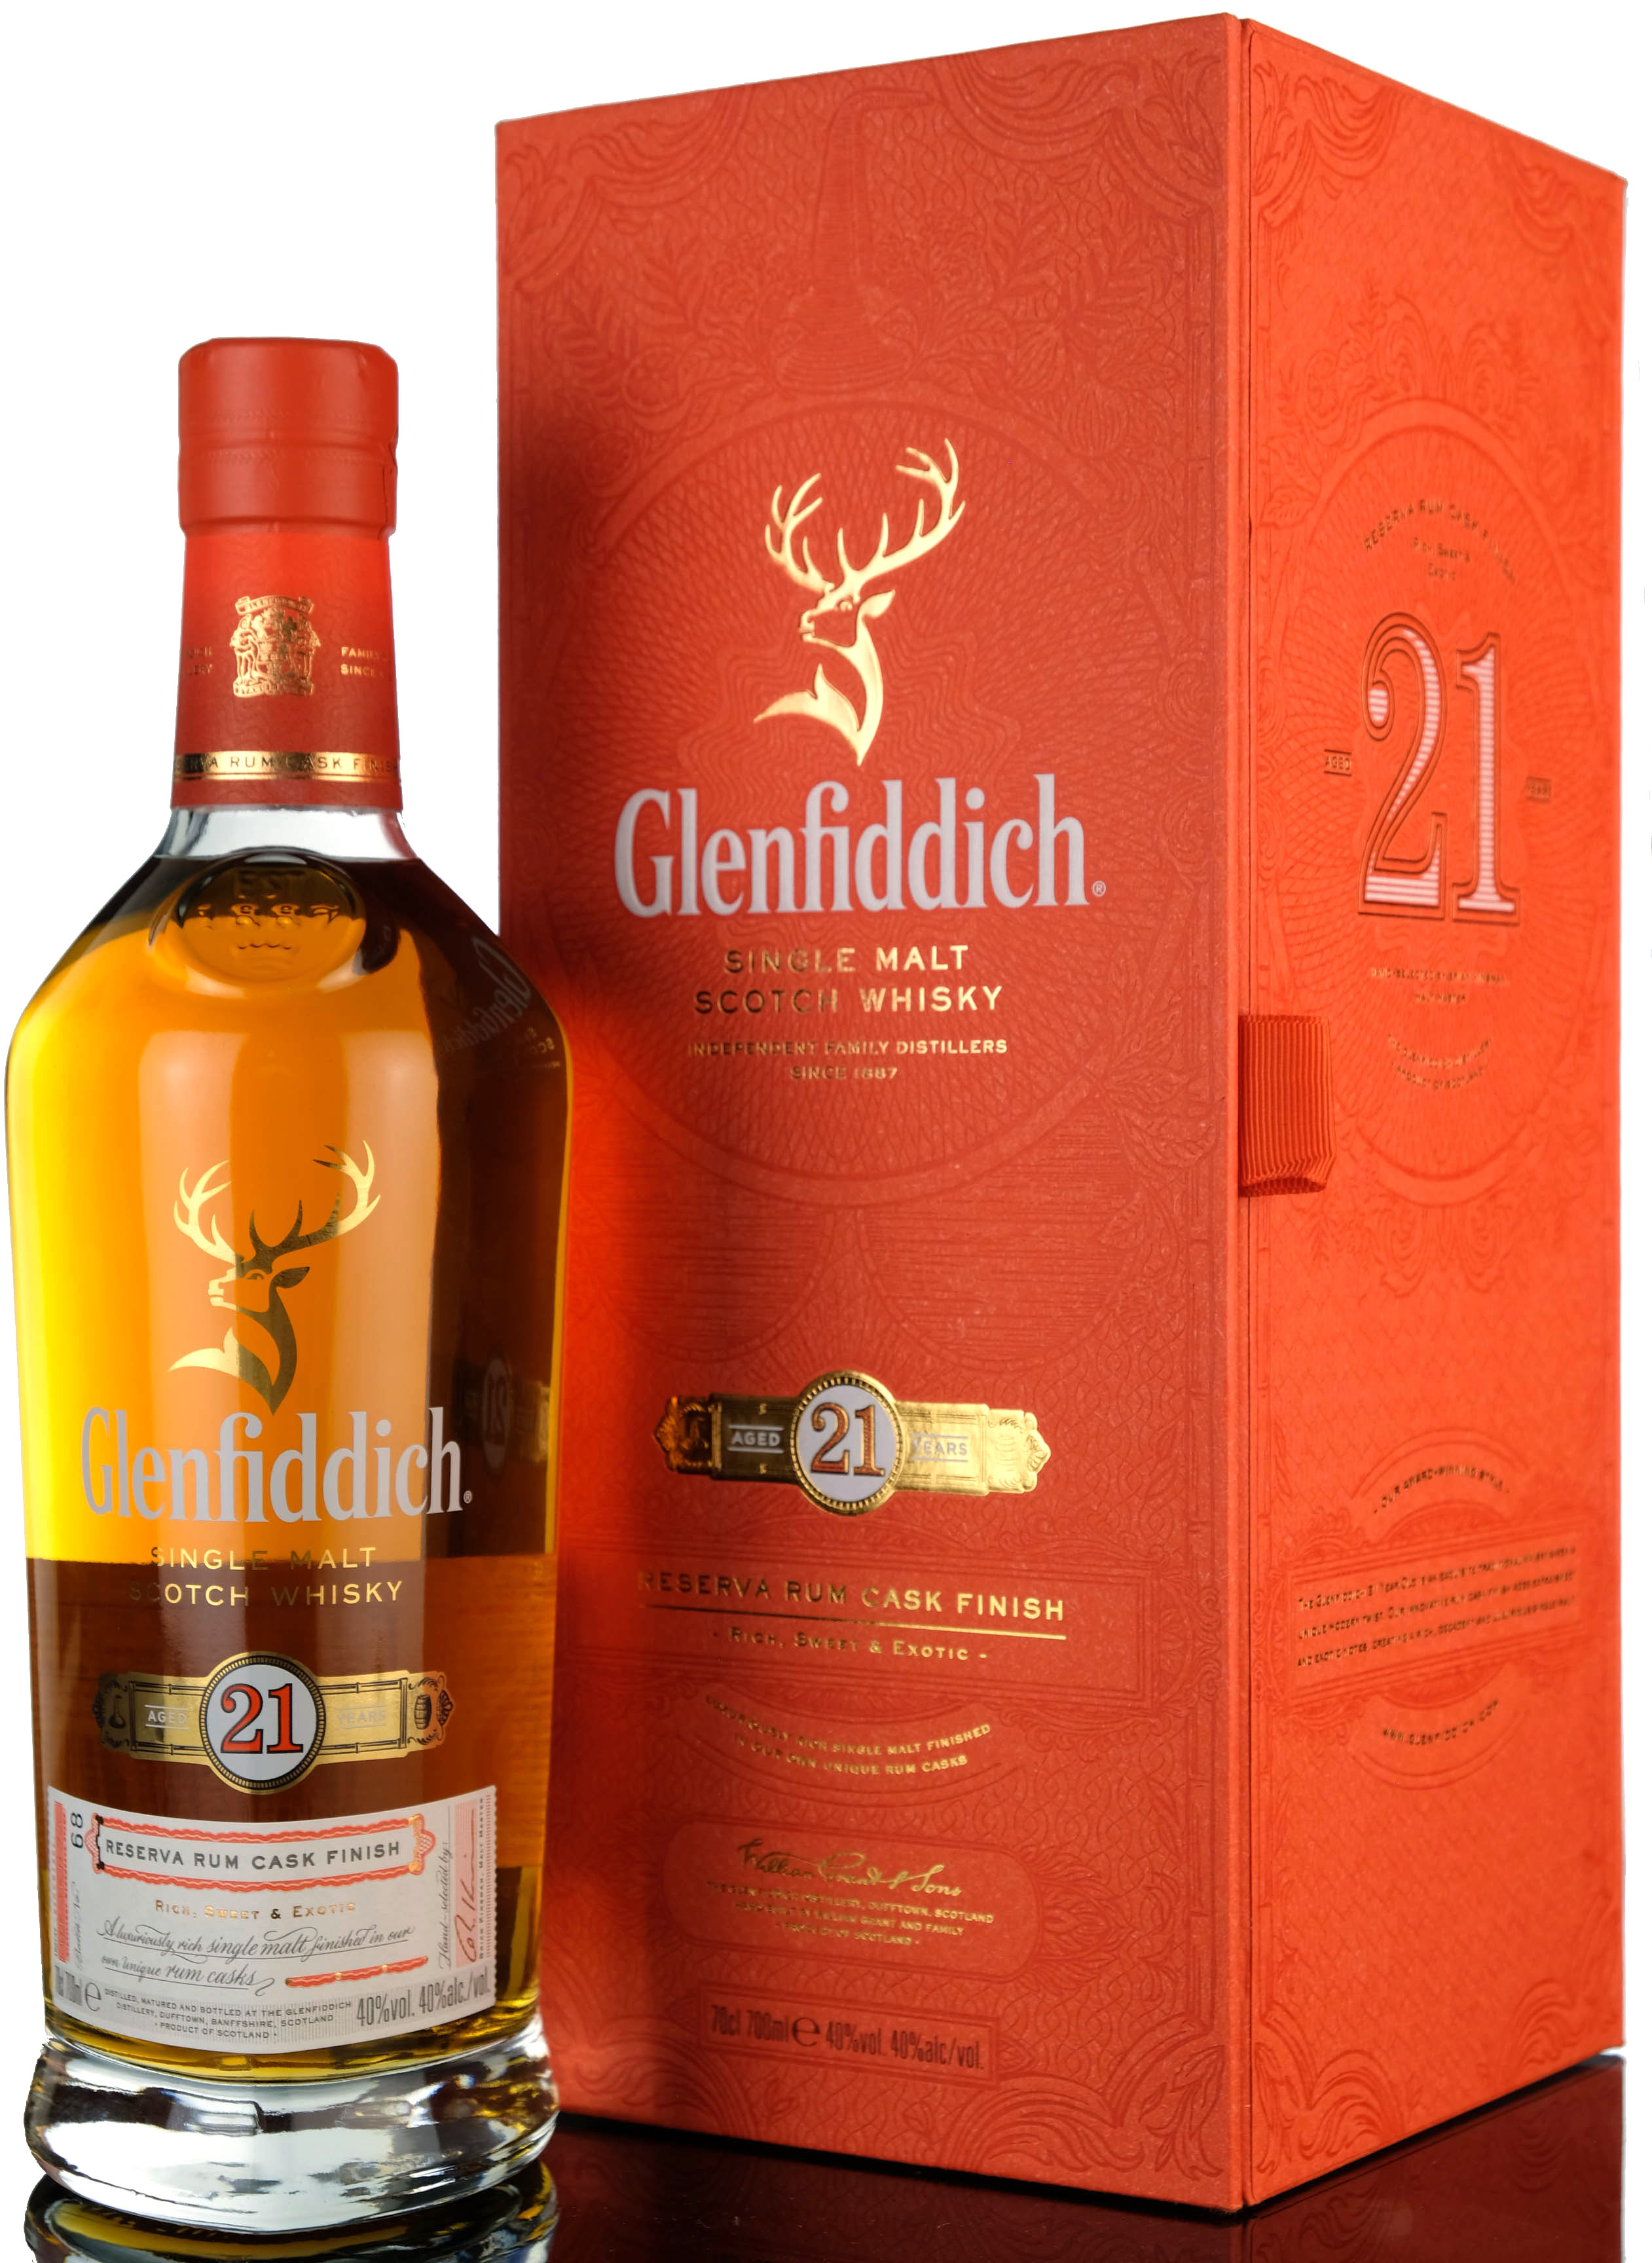 Glenfiddich 21 Year Old - Reserva Rum Cask Finish